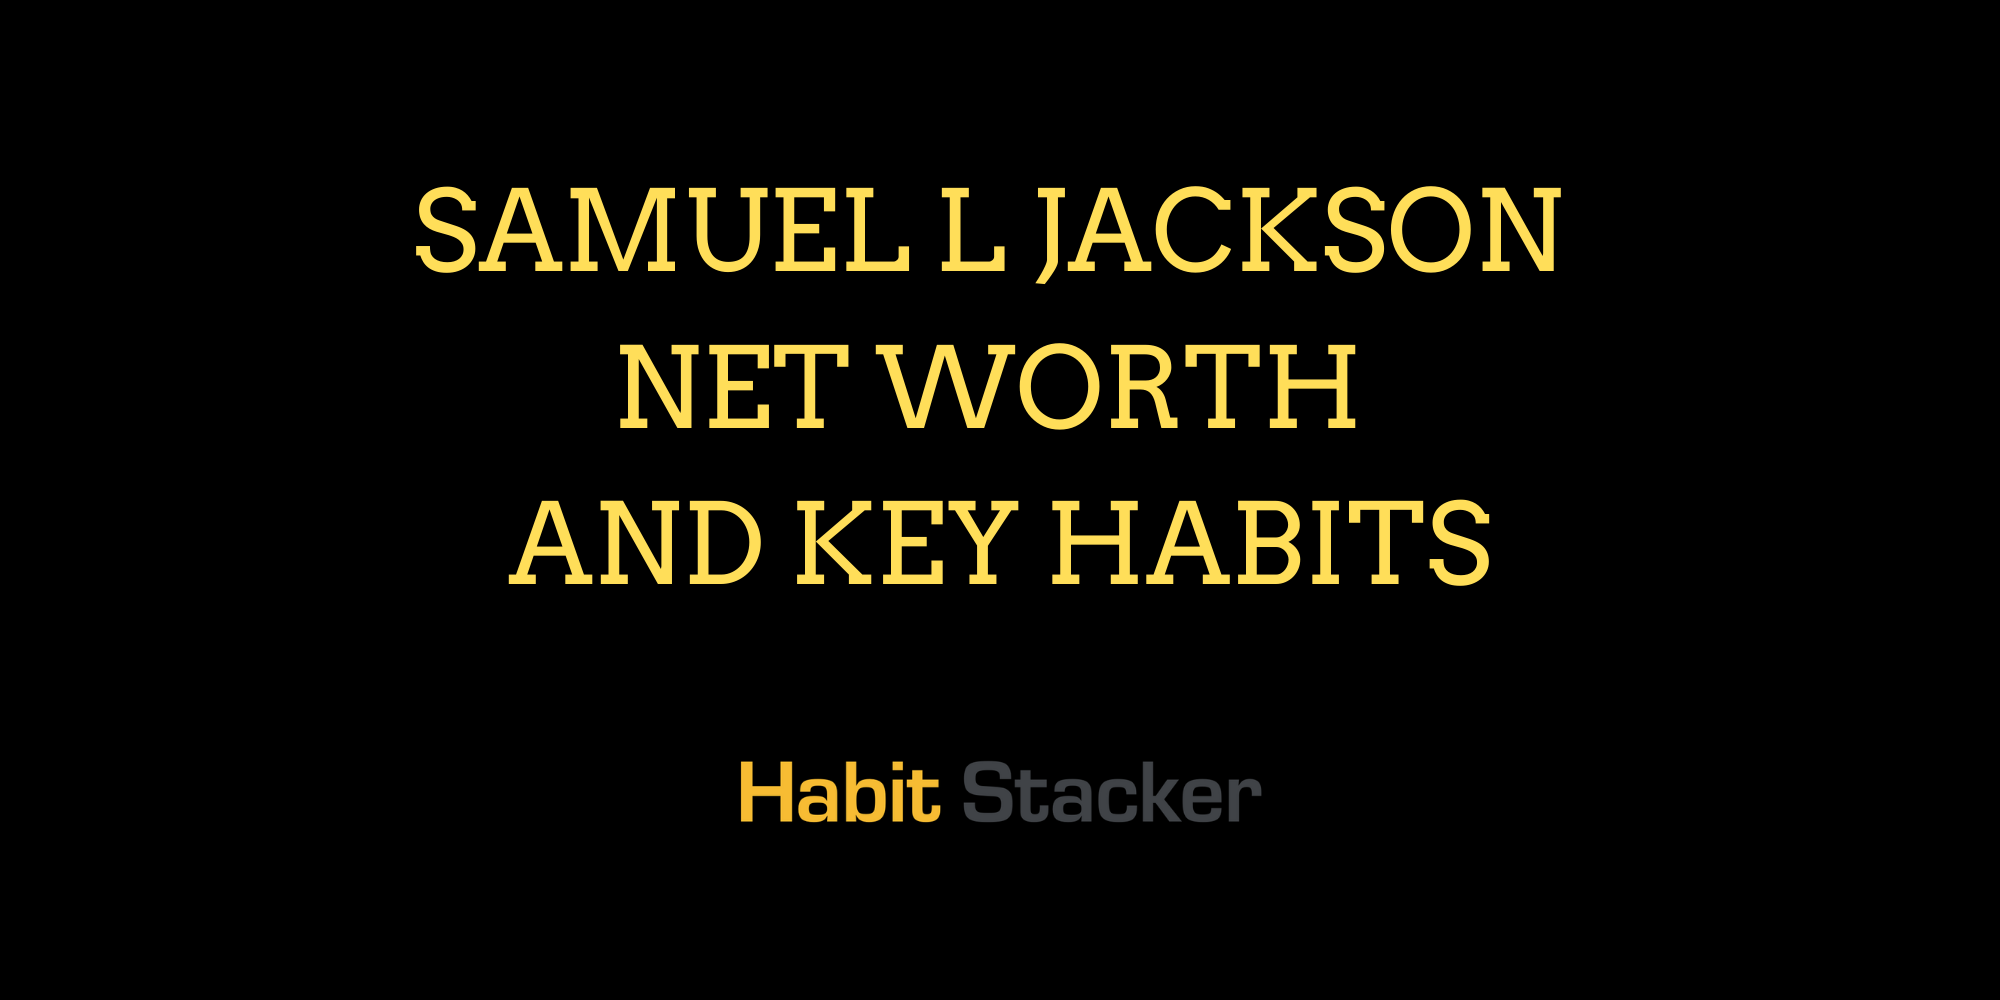 Samuel L Jackson Net Worth and Key Habits